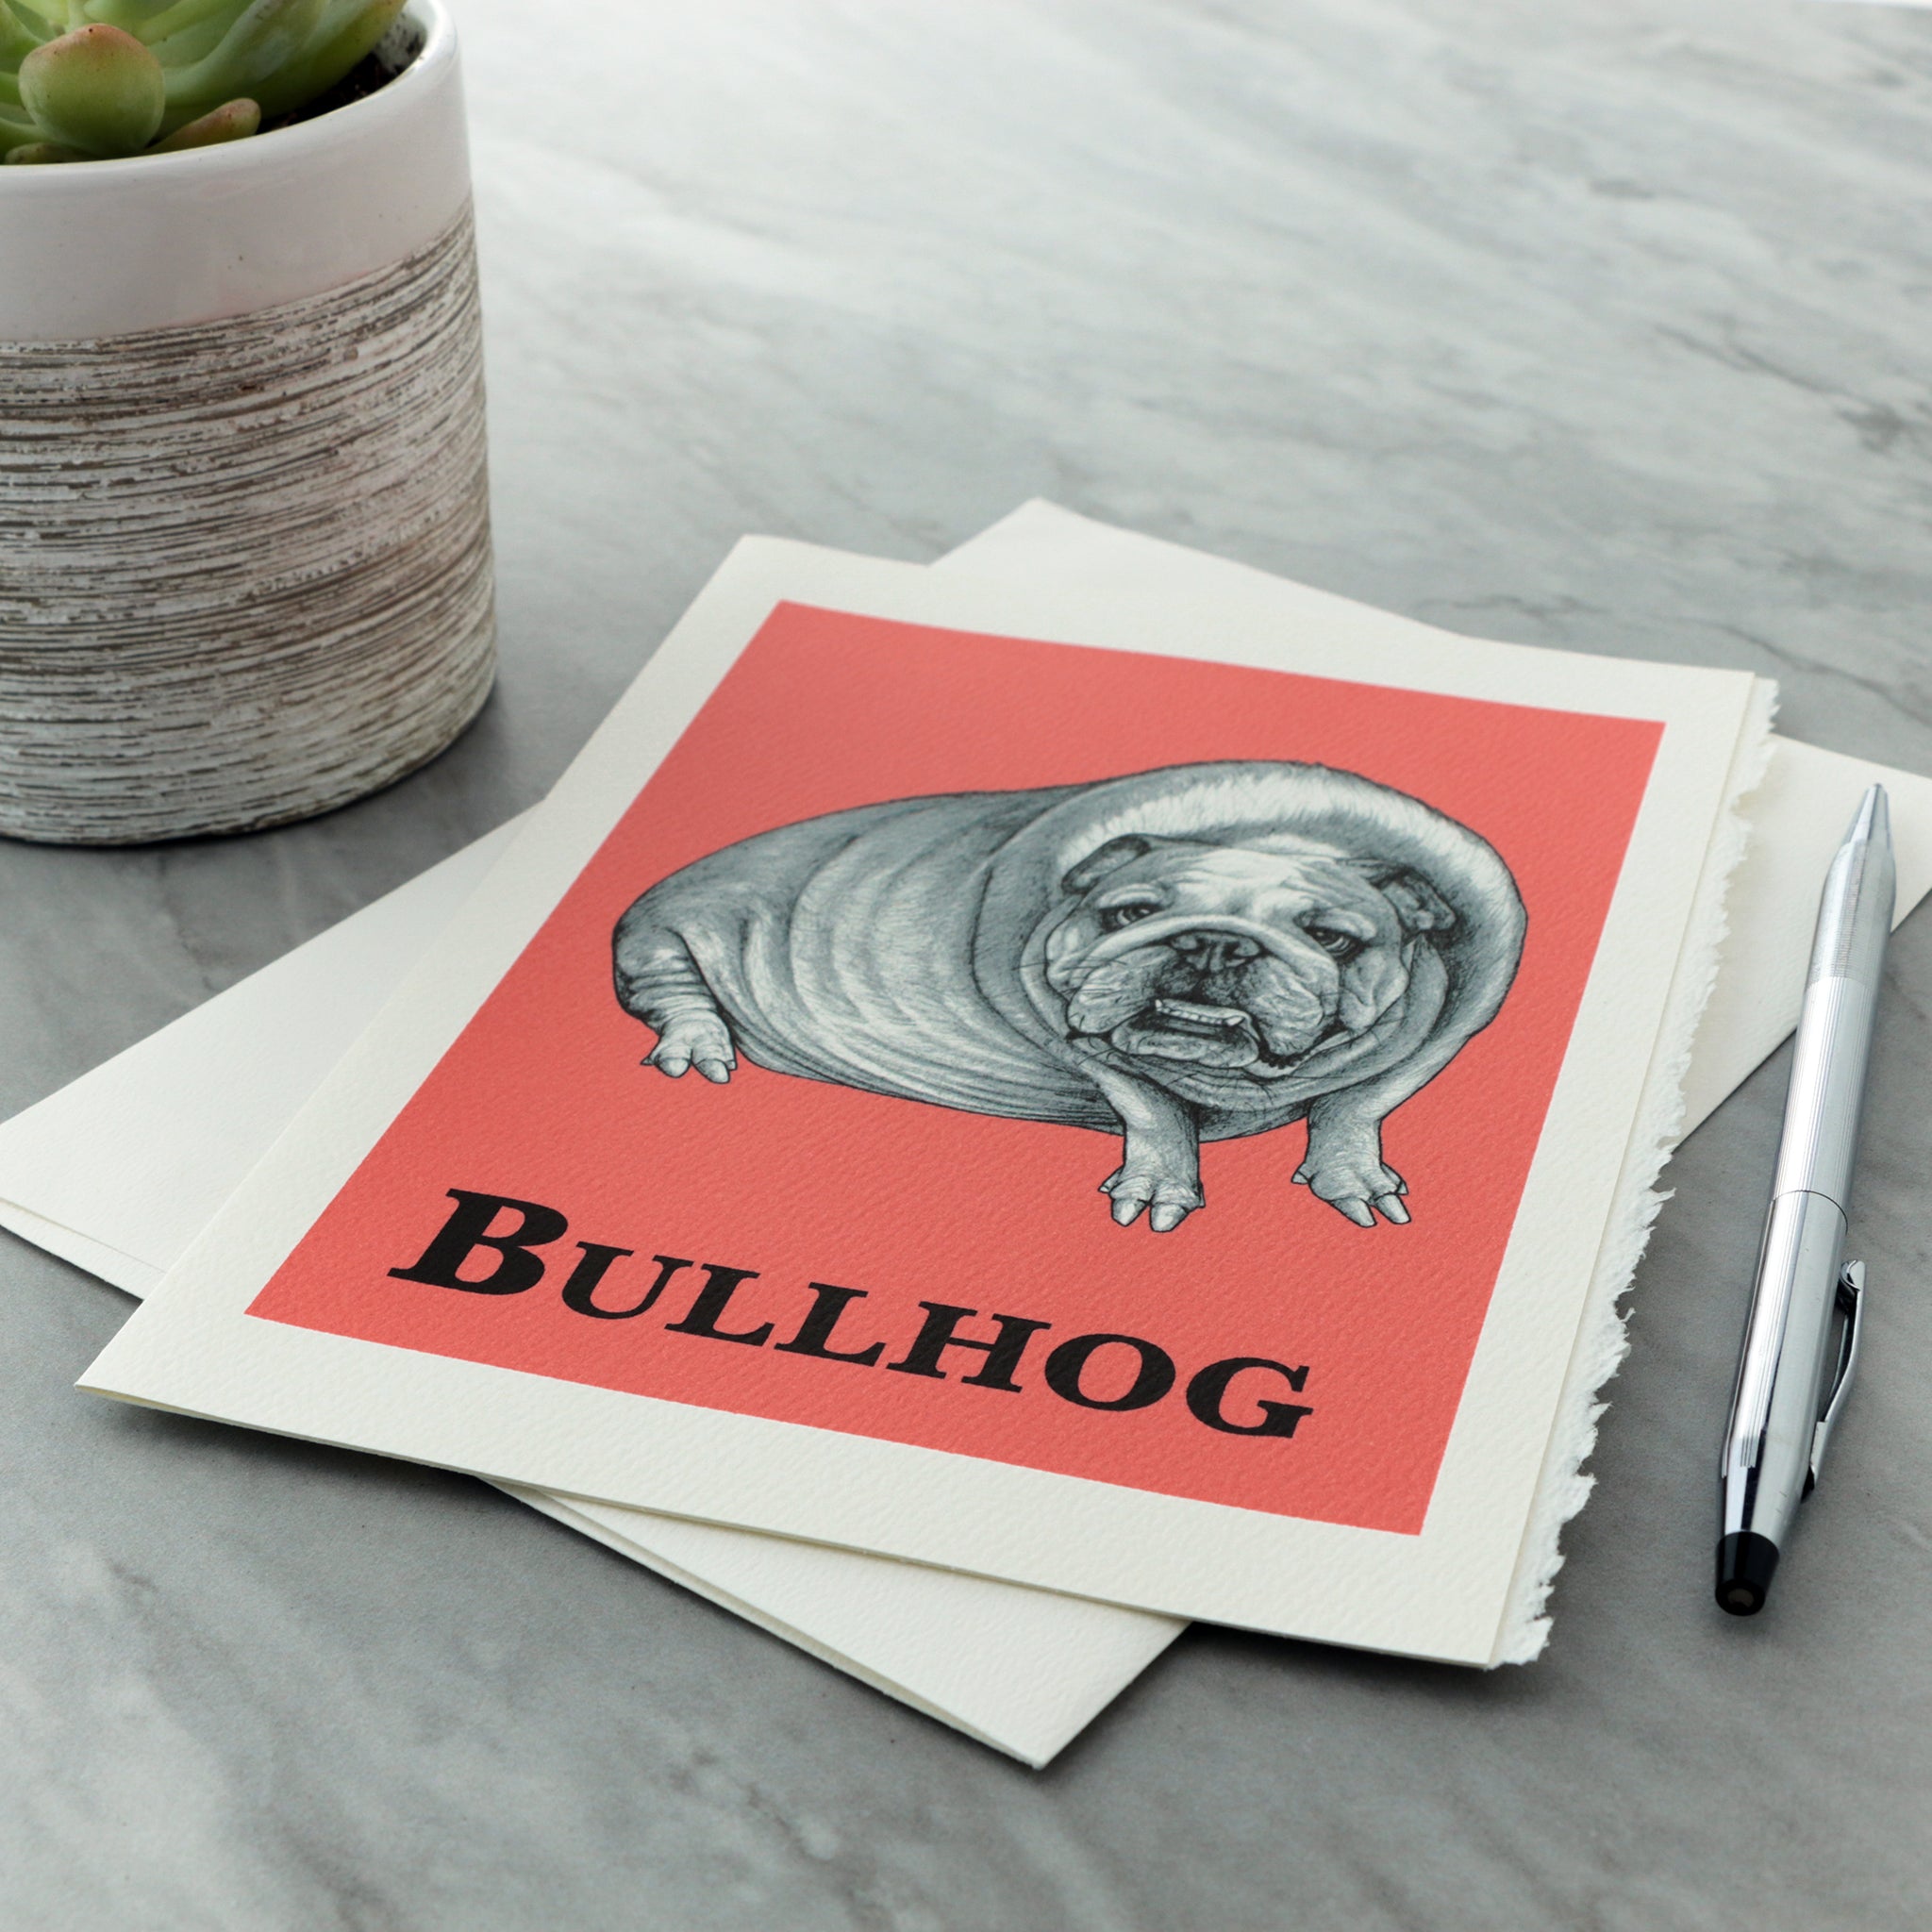 Bullhog 5x7" Greeting Card